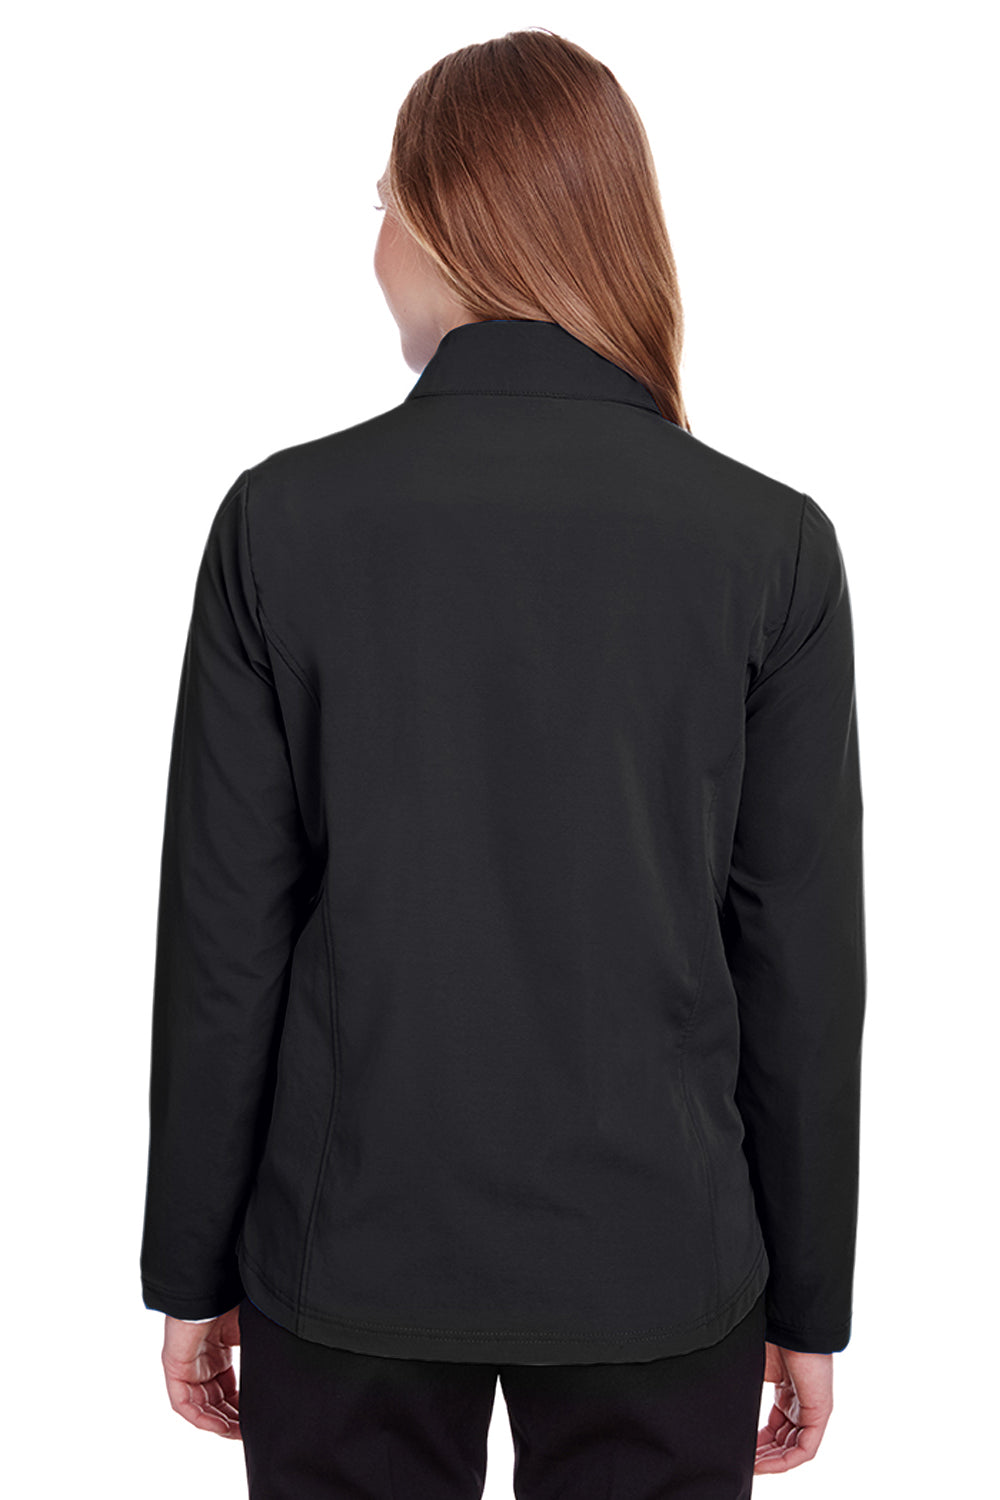 North End NE401W Womens Quest Performance Moisture Wicking 1/4 Zip Sweatshirt Black/Carbon Grey Back